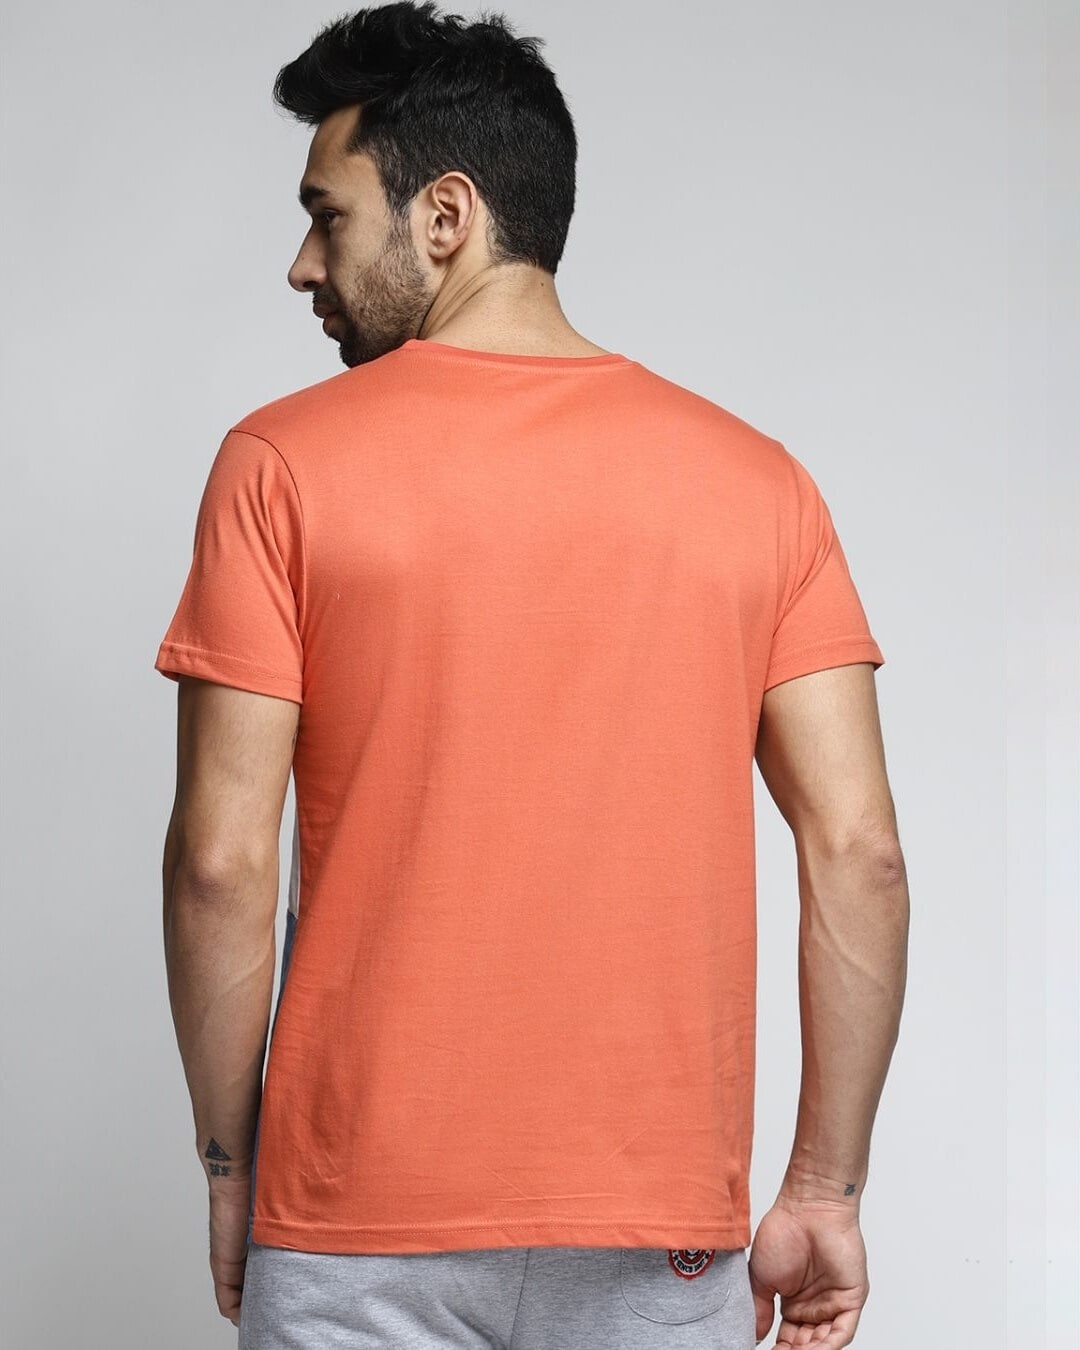 Shop Men's Orange Colourblocked T-shirt